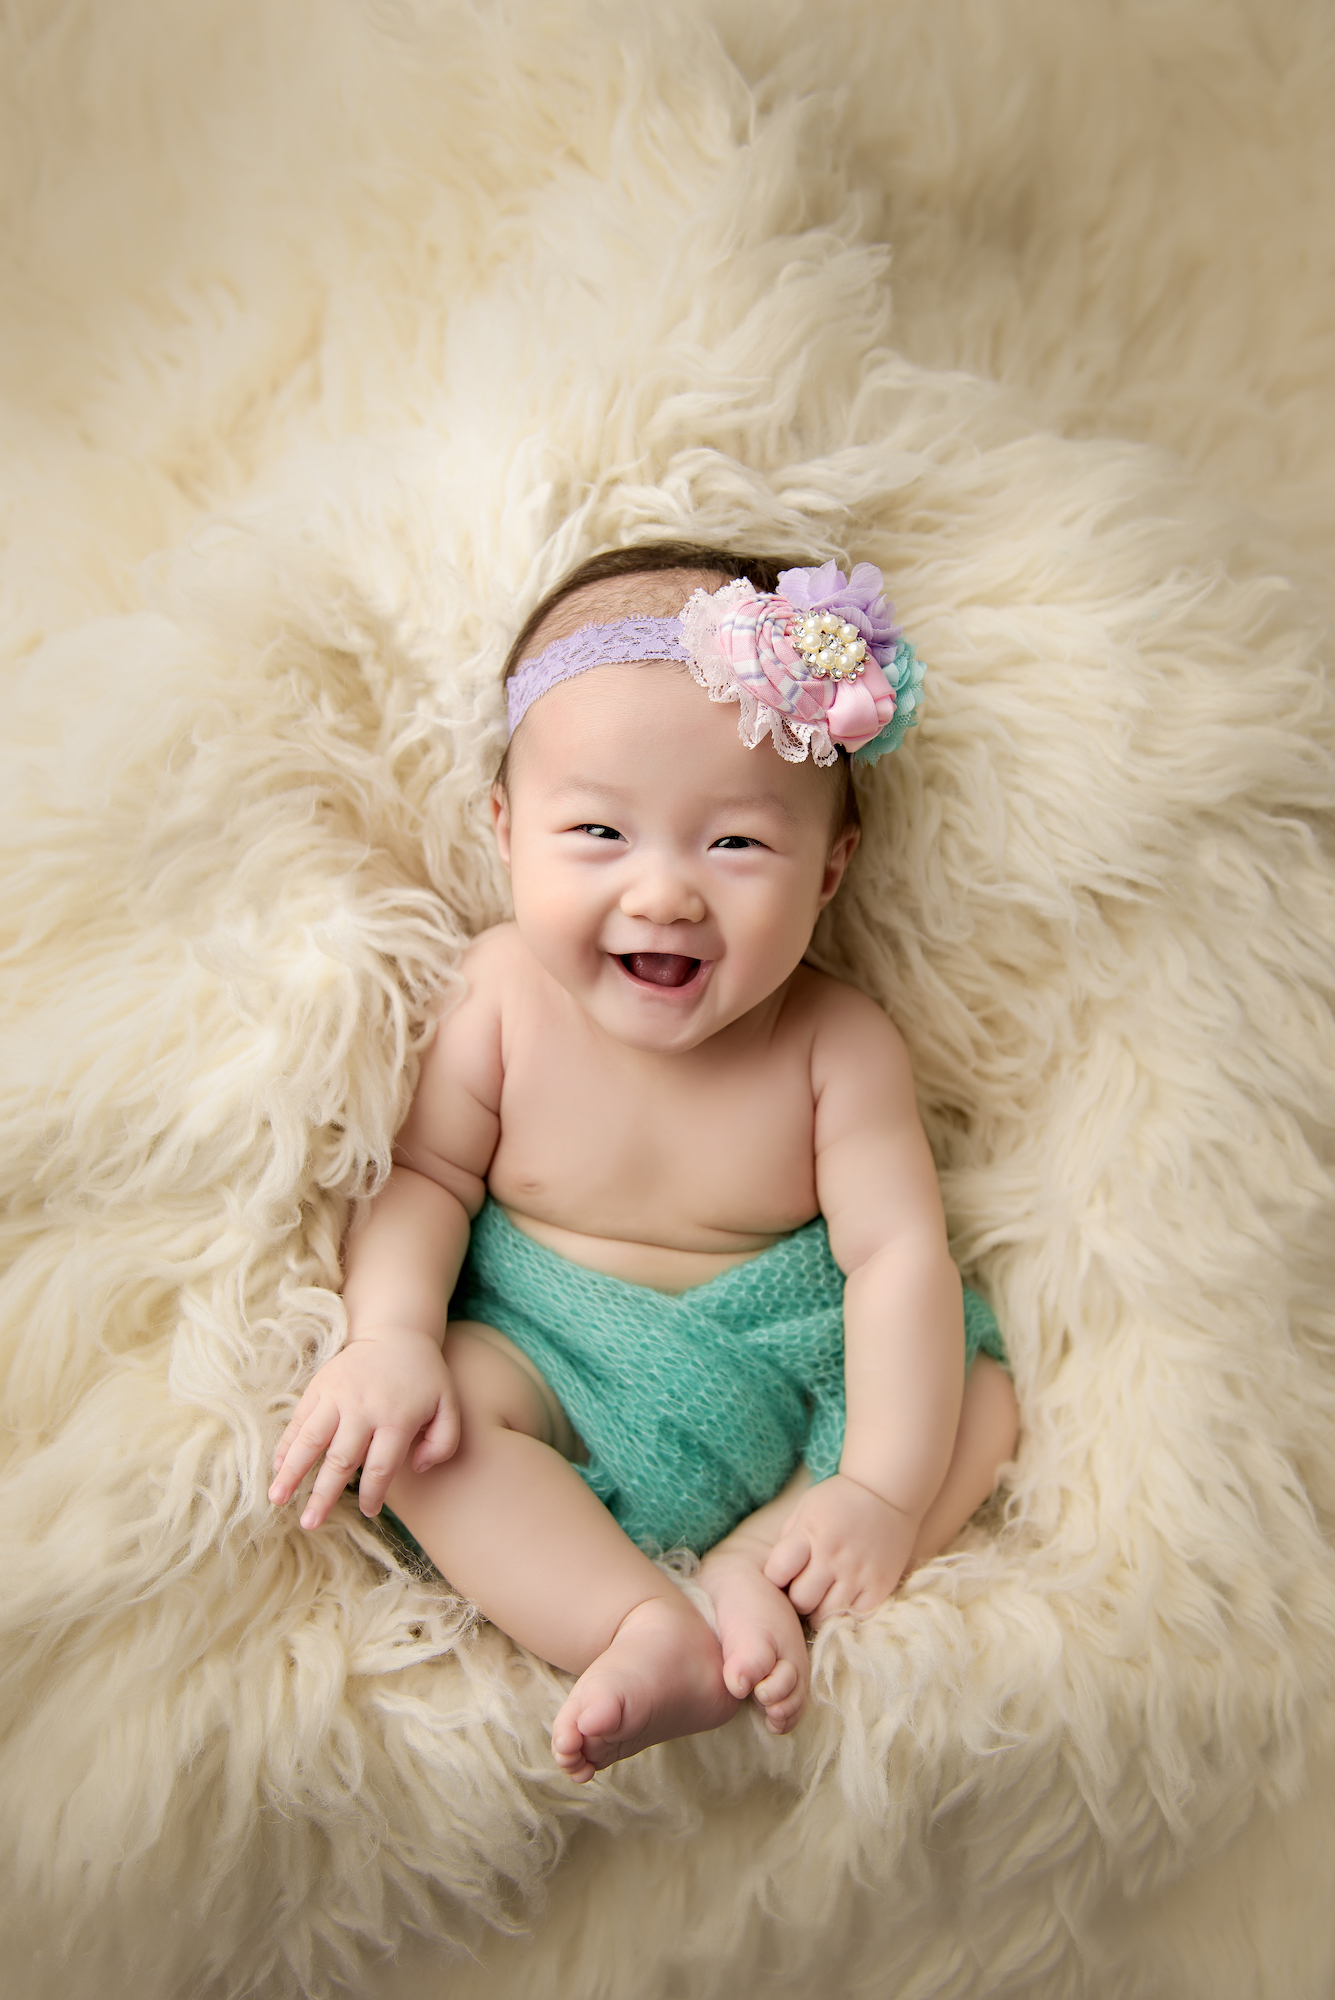 100 Days Photos Baby Smiling On Cream Fur